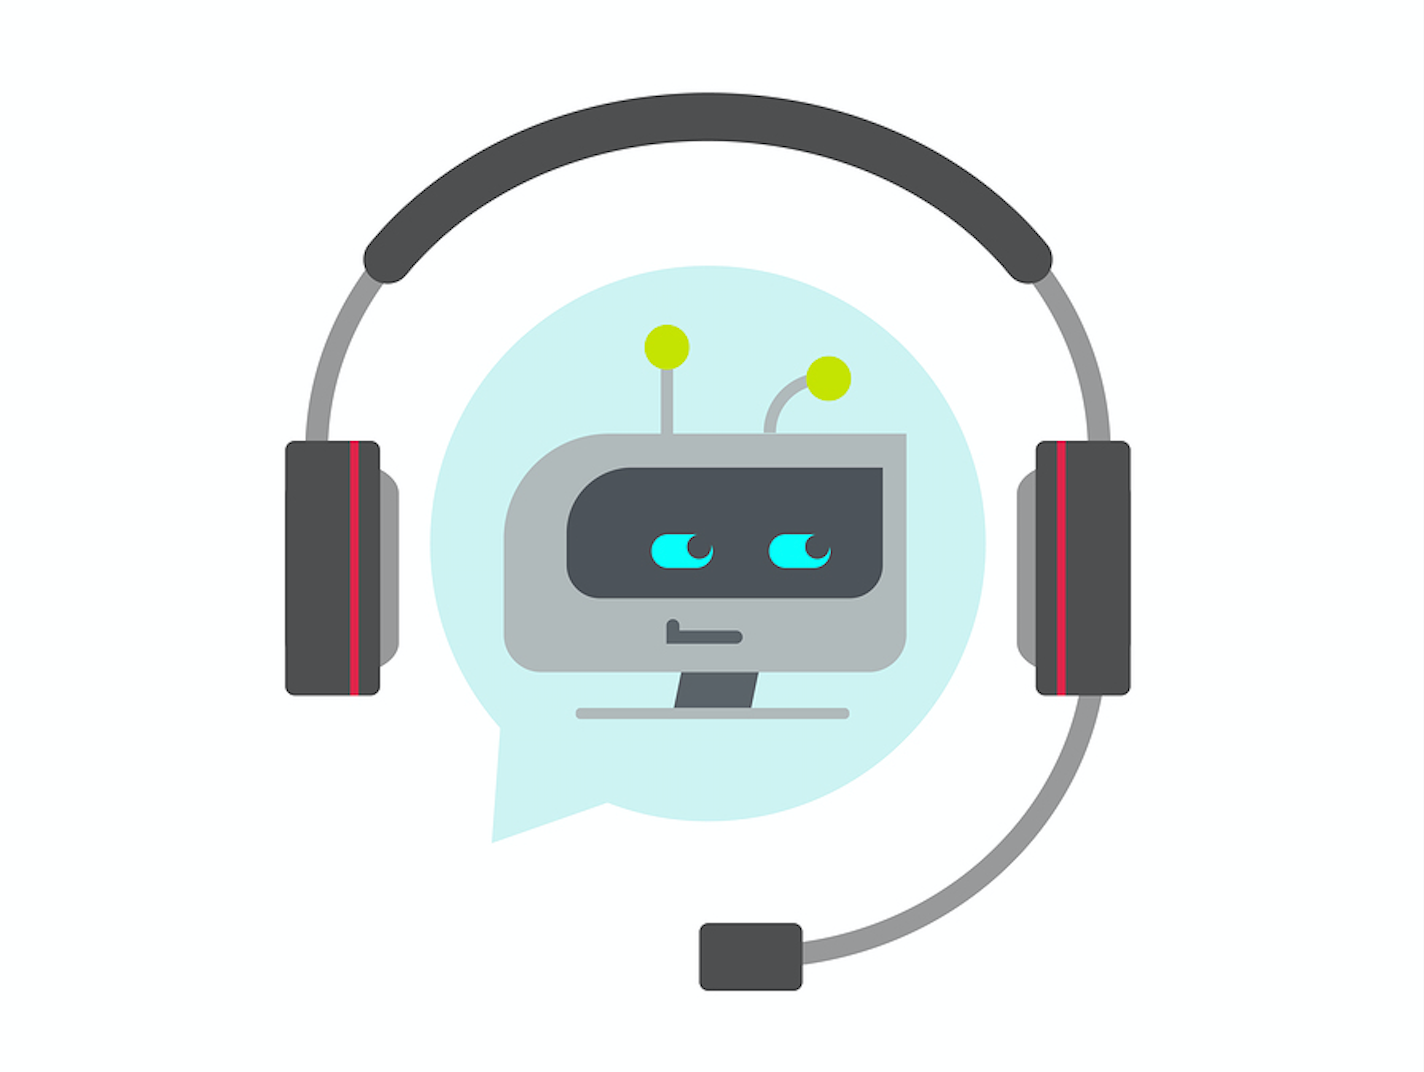 customer service chatbot solution for websites